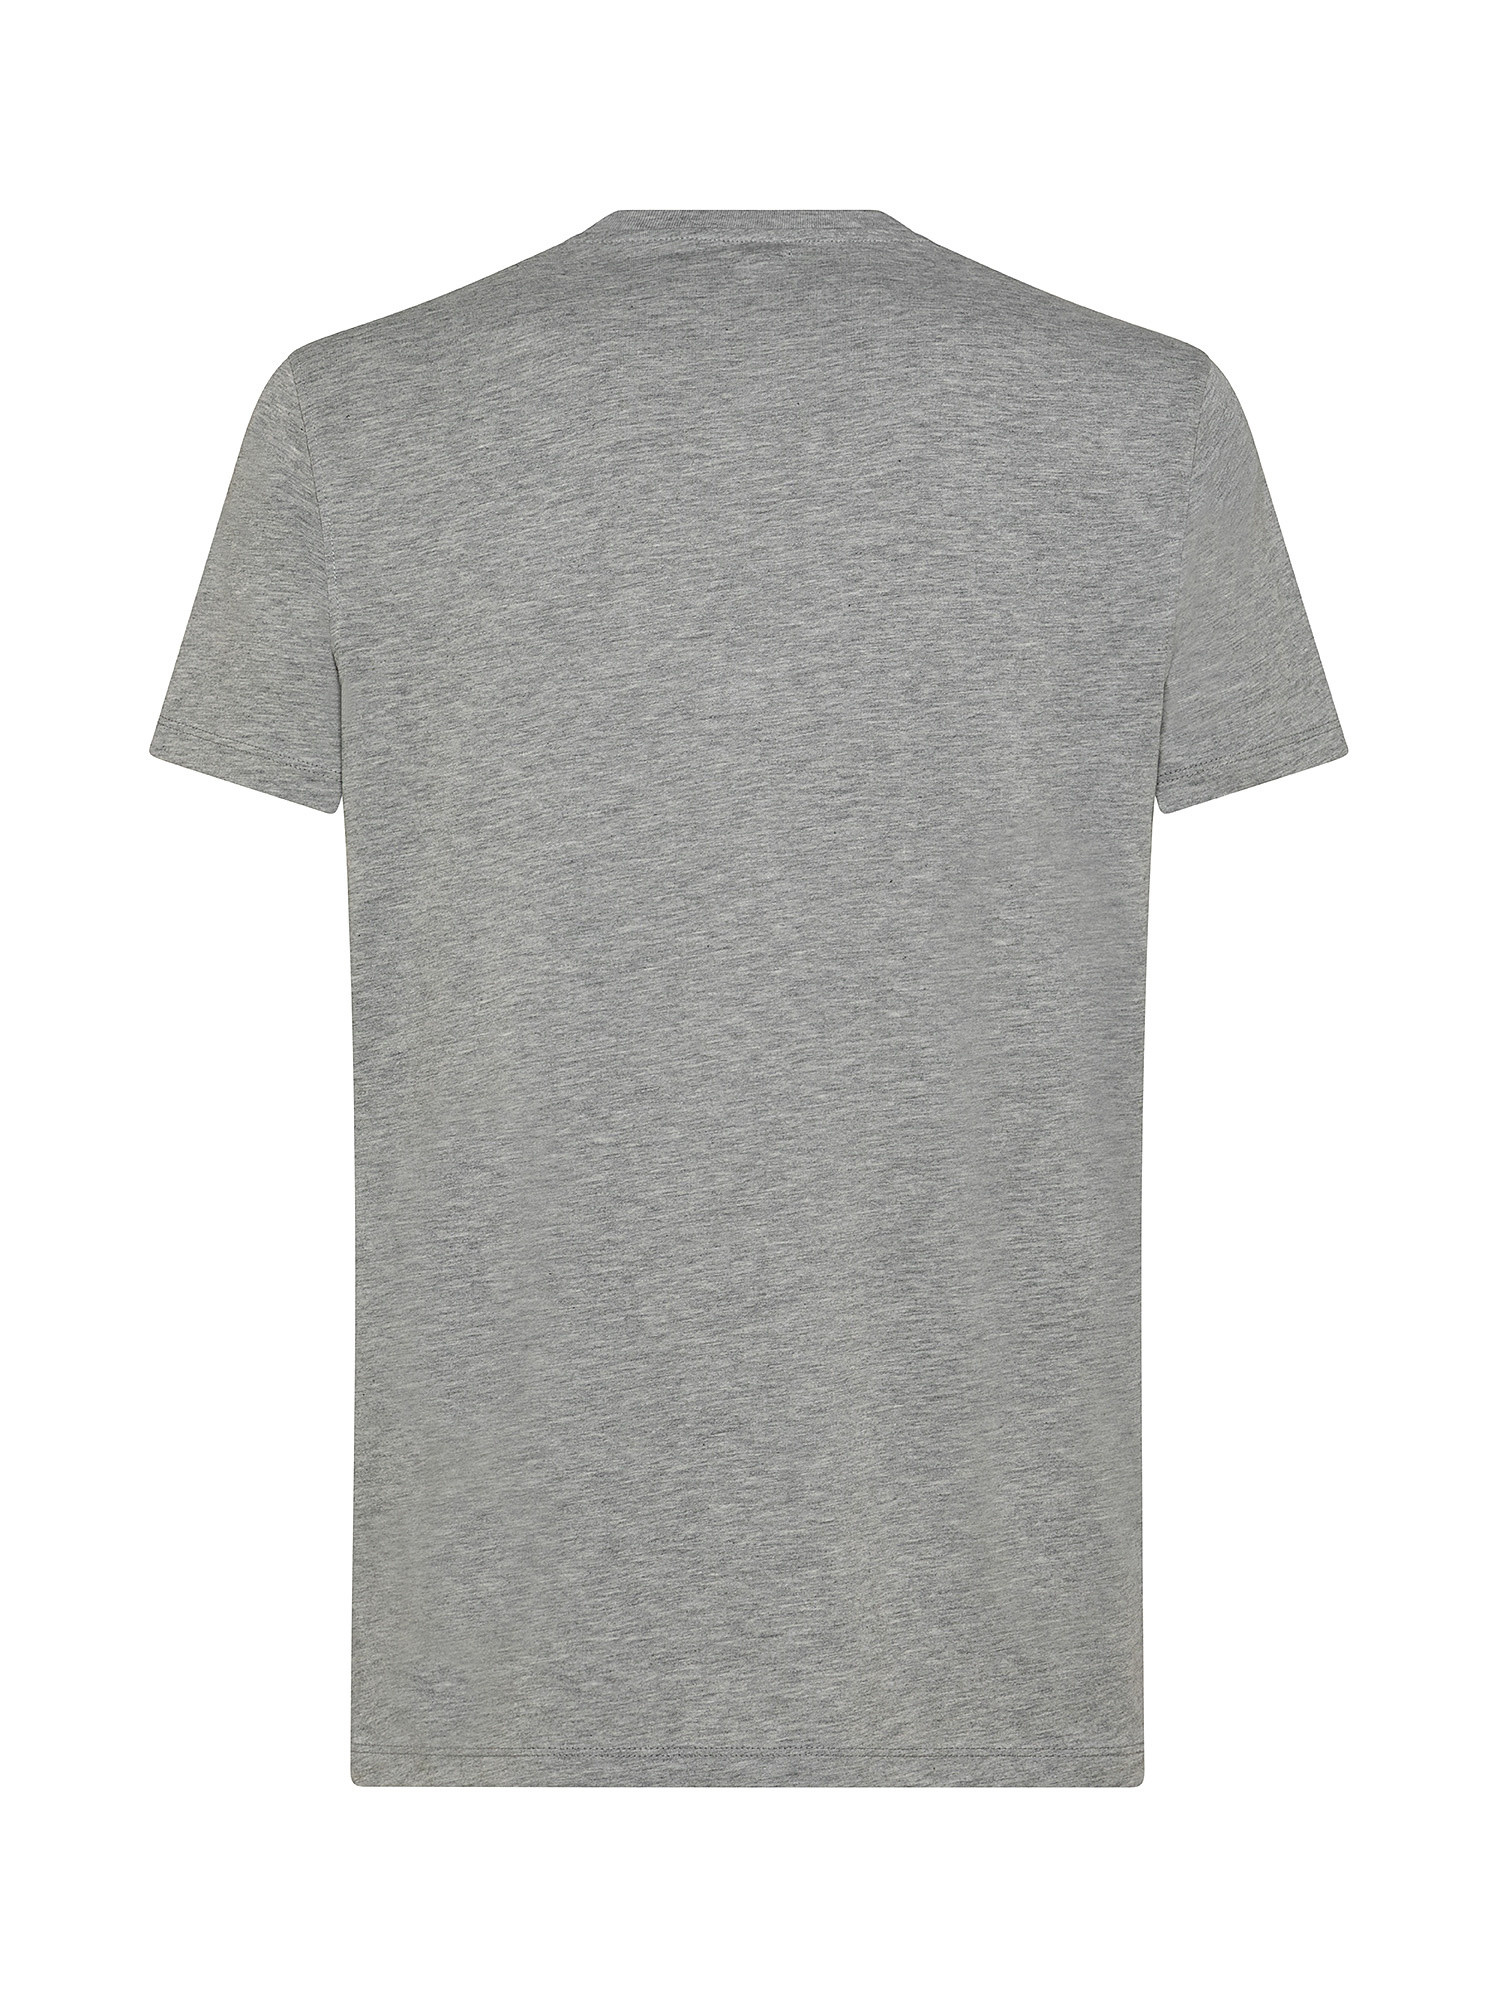 Luca D'Altieri - Crew neck supima cotton T-shirt, Grey, large image number 1